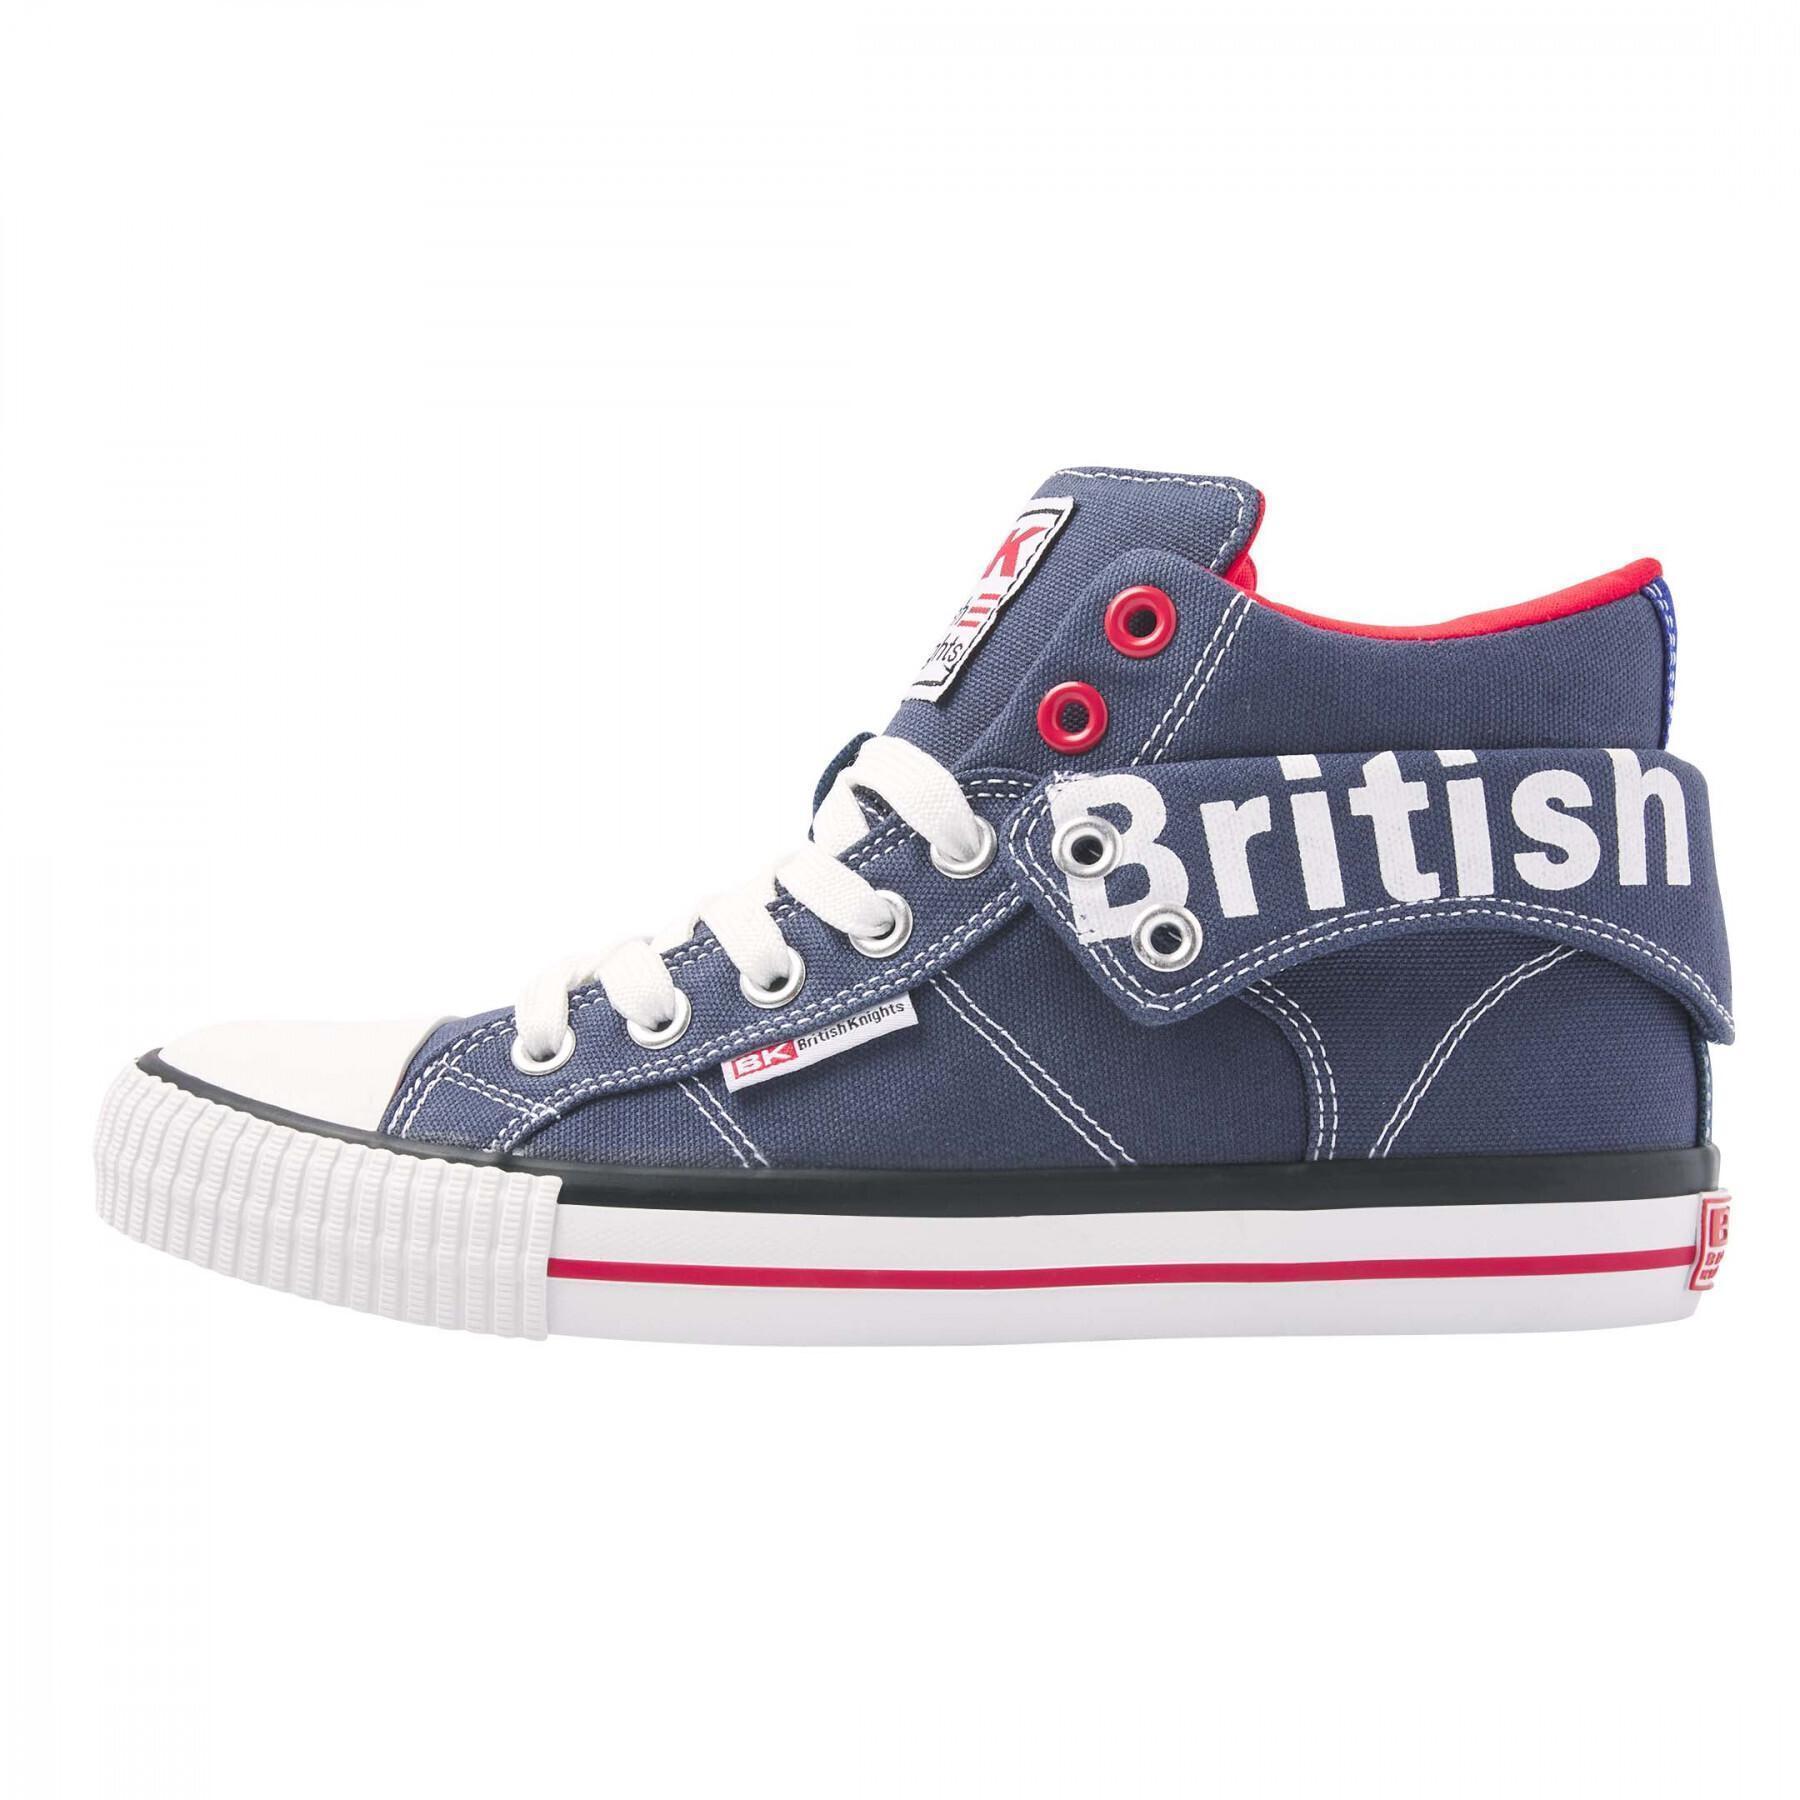 Sneakers British Knights Roco